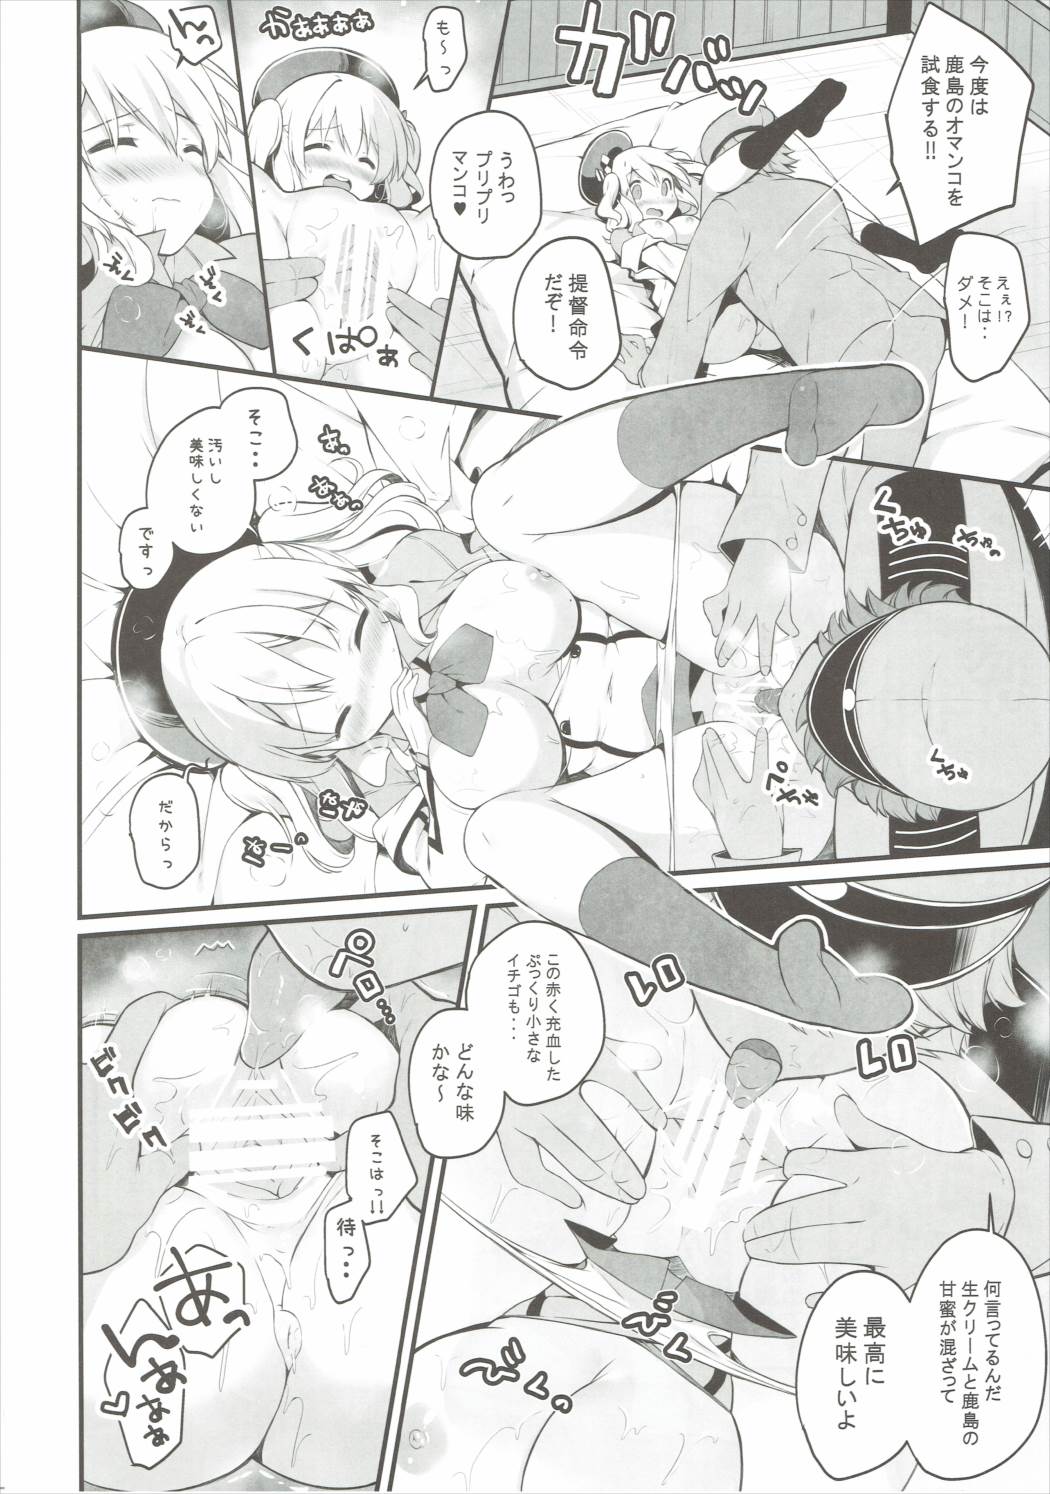 (COMIC1☆10) [mocha*2popcorn (きびぃもか)] 鹿島特製フルーツサンドめしあがれ (艦隊これくしょん -艦これ-)